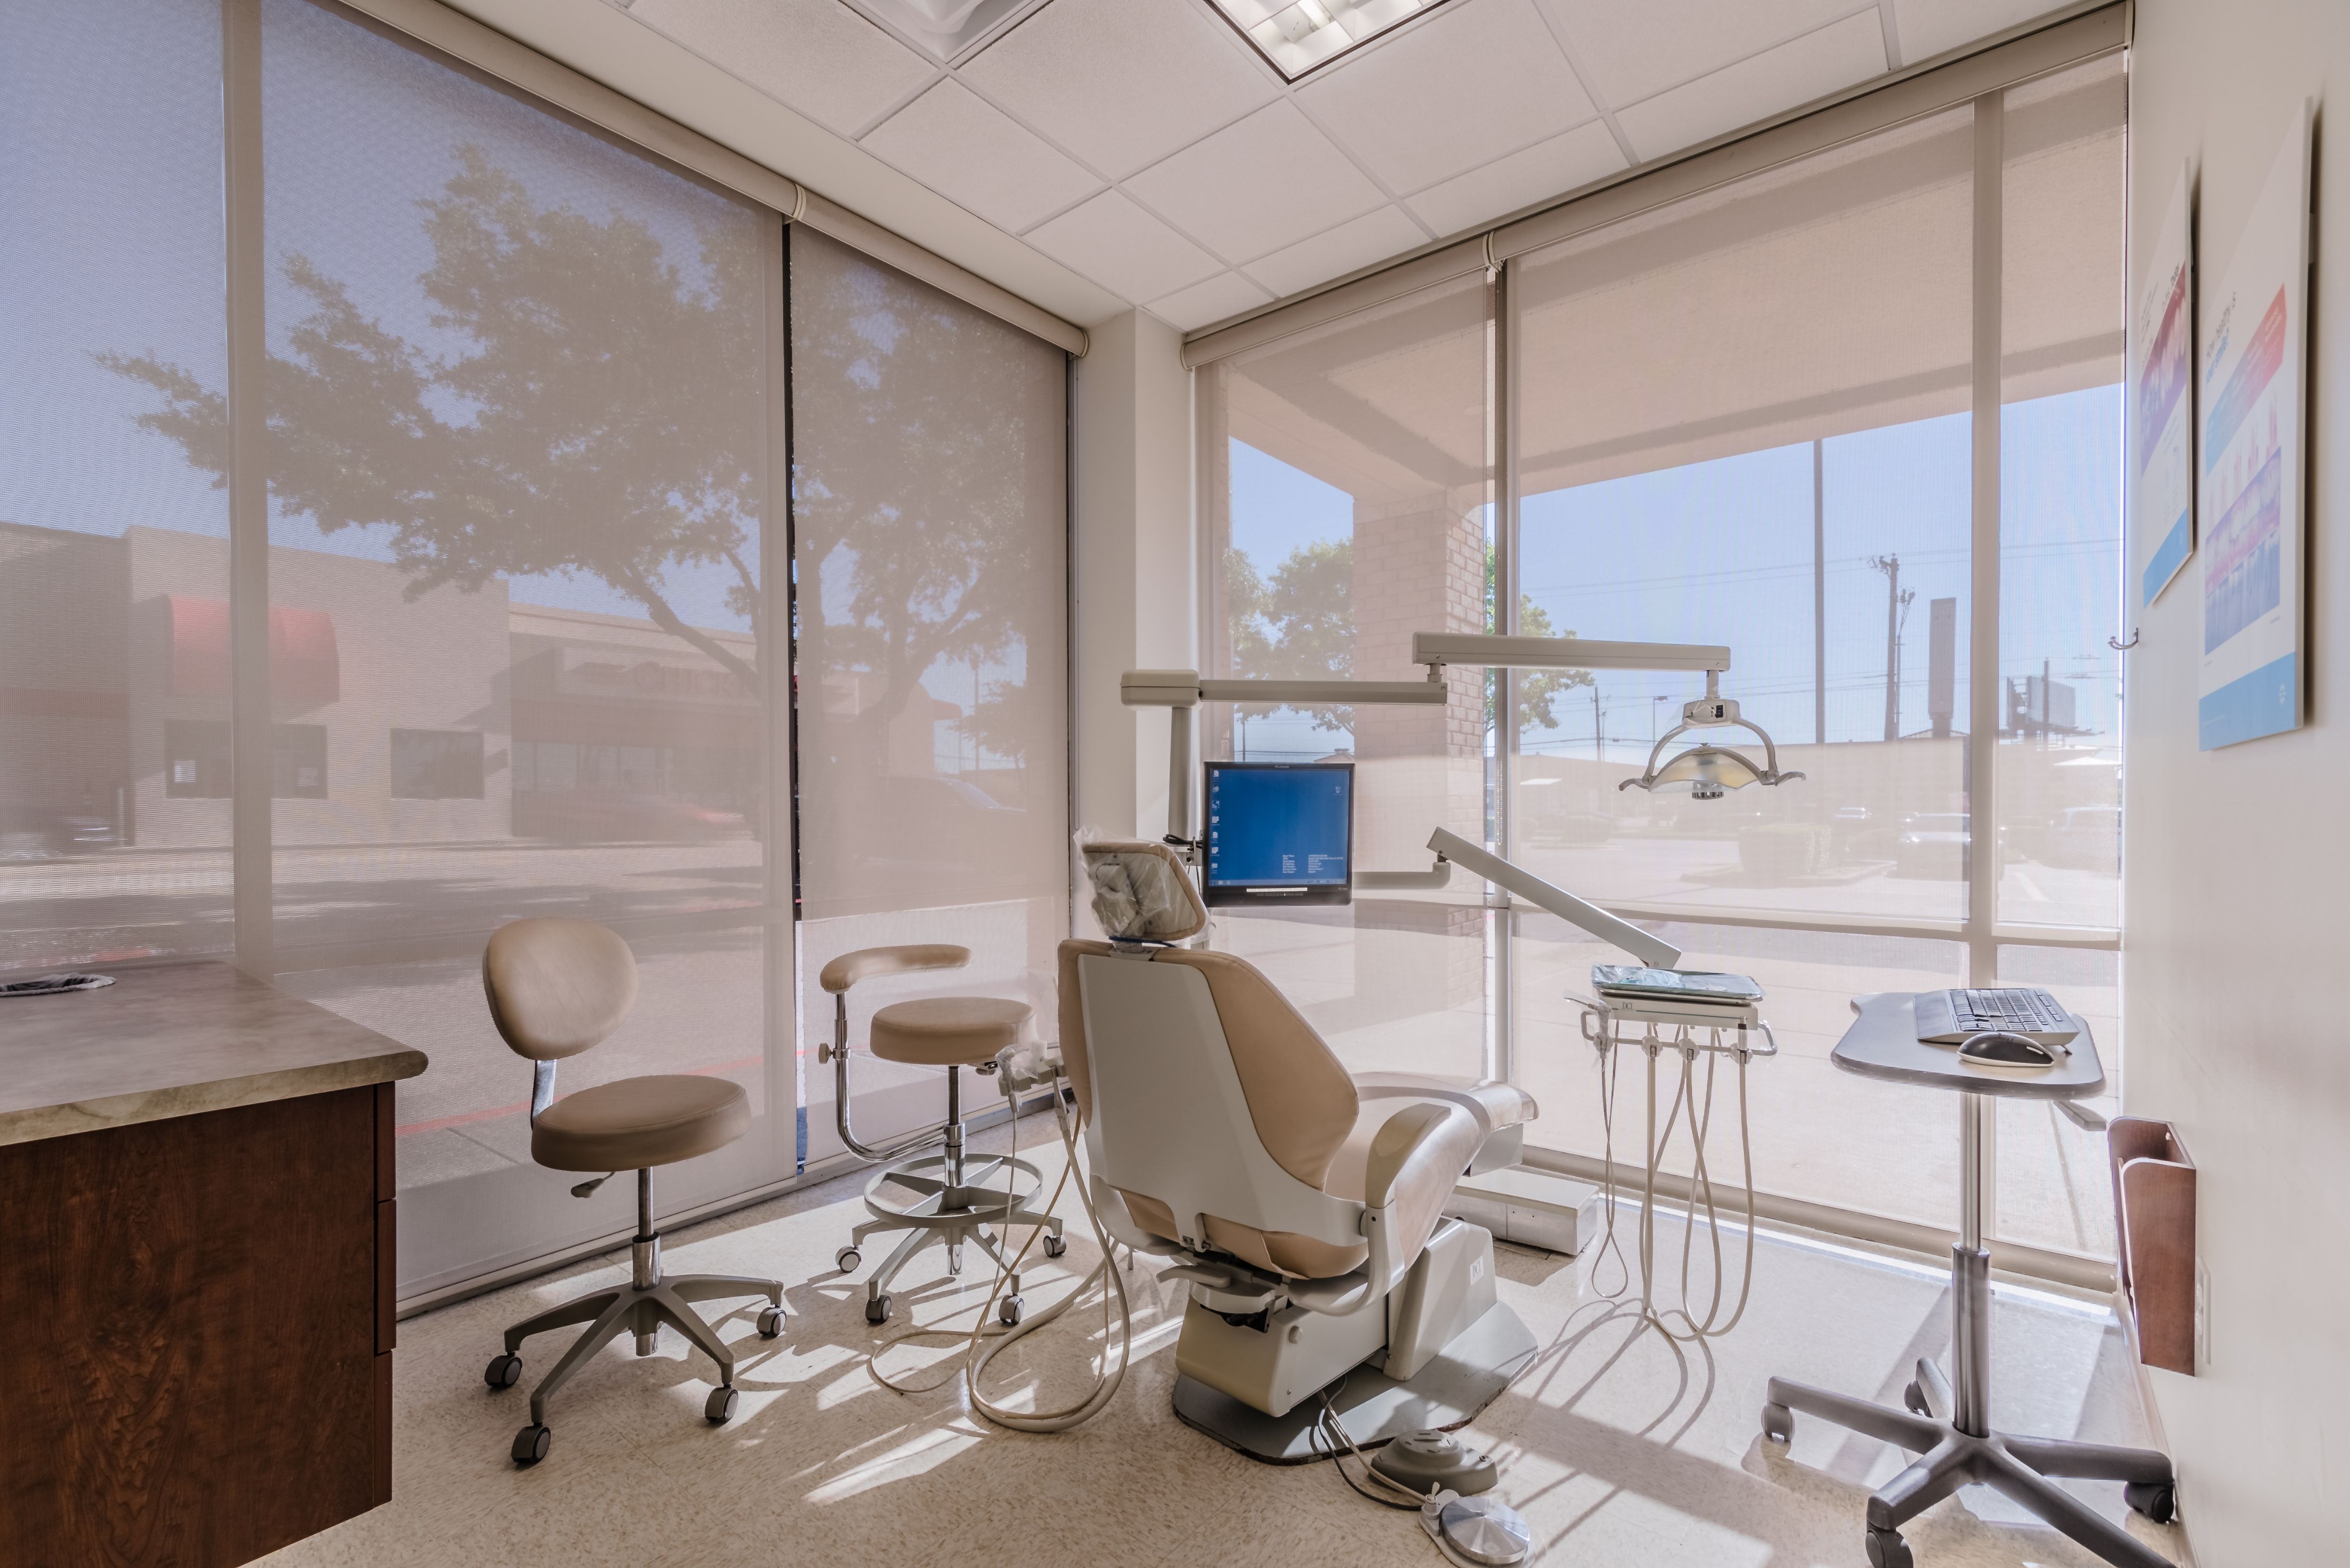 Preston Modern Dentistry Dallas (972)661-2766